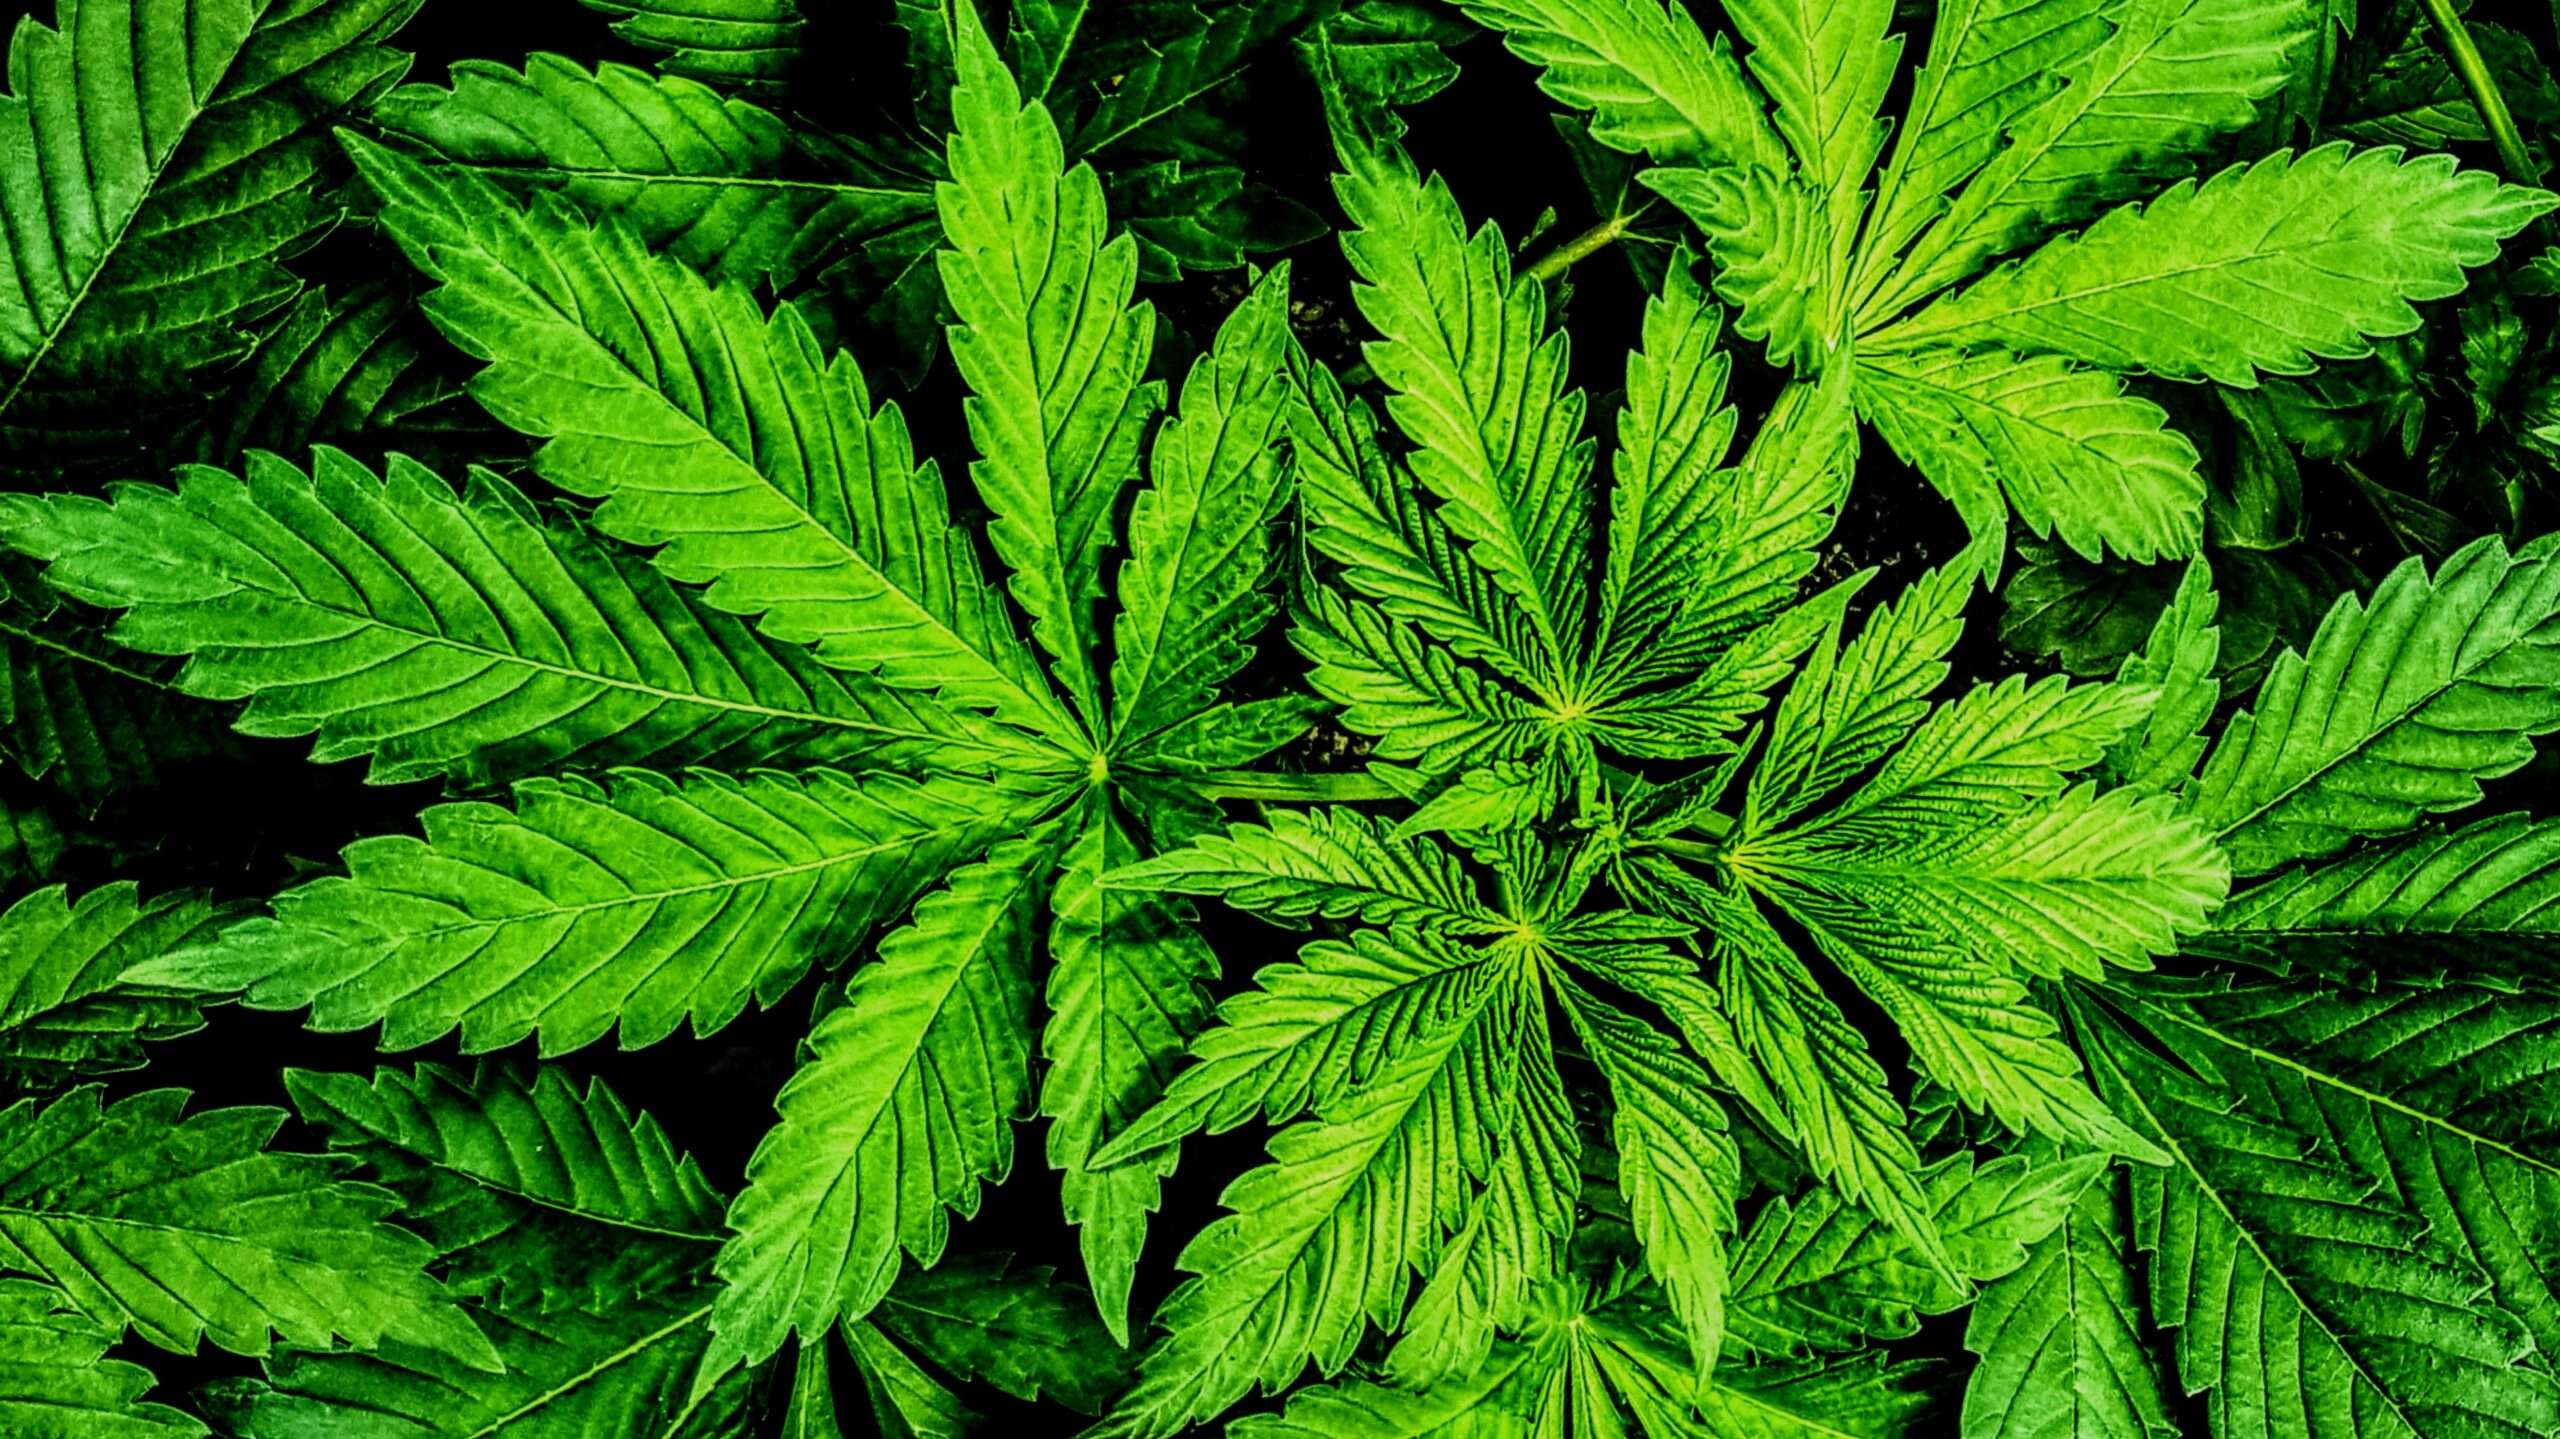 Ohio Voters Pass Issue 2 Legalizing Recreational Marijuana Use